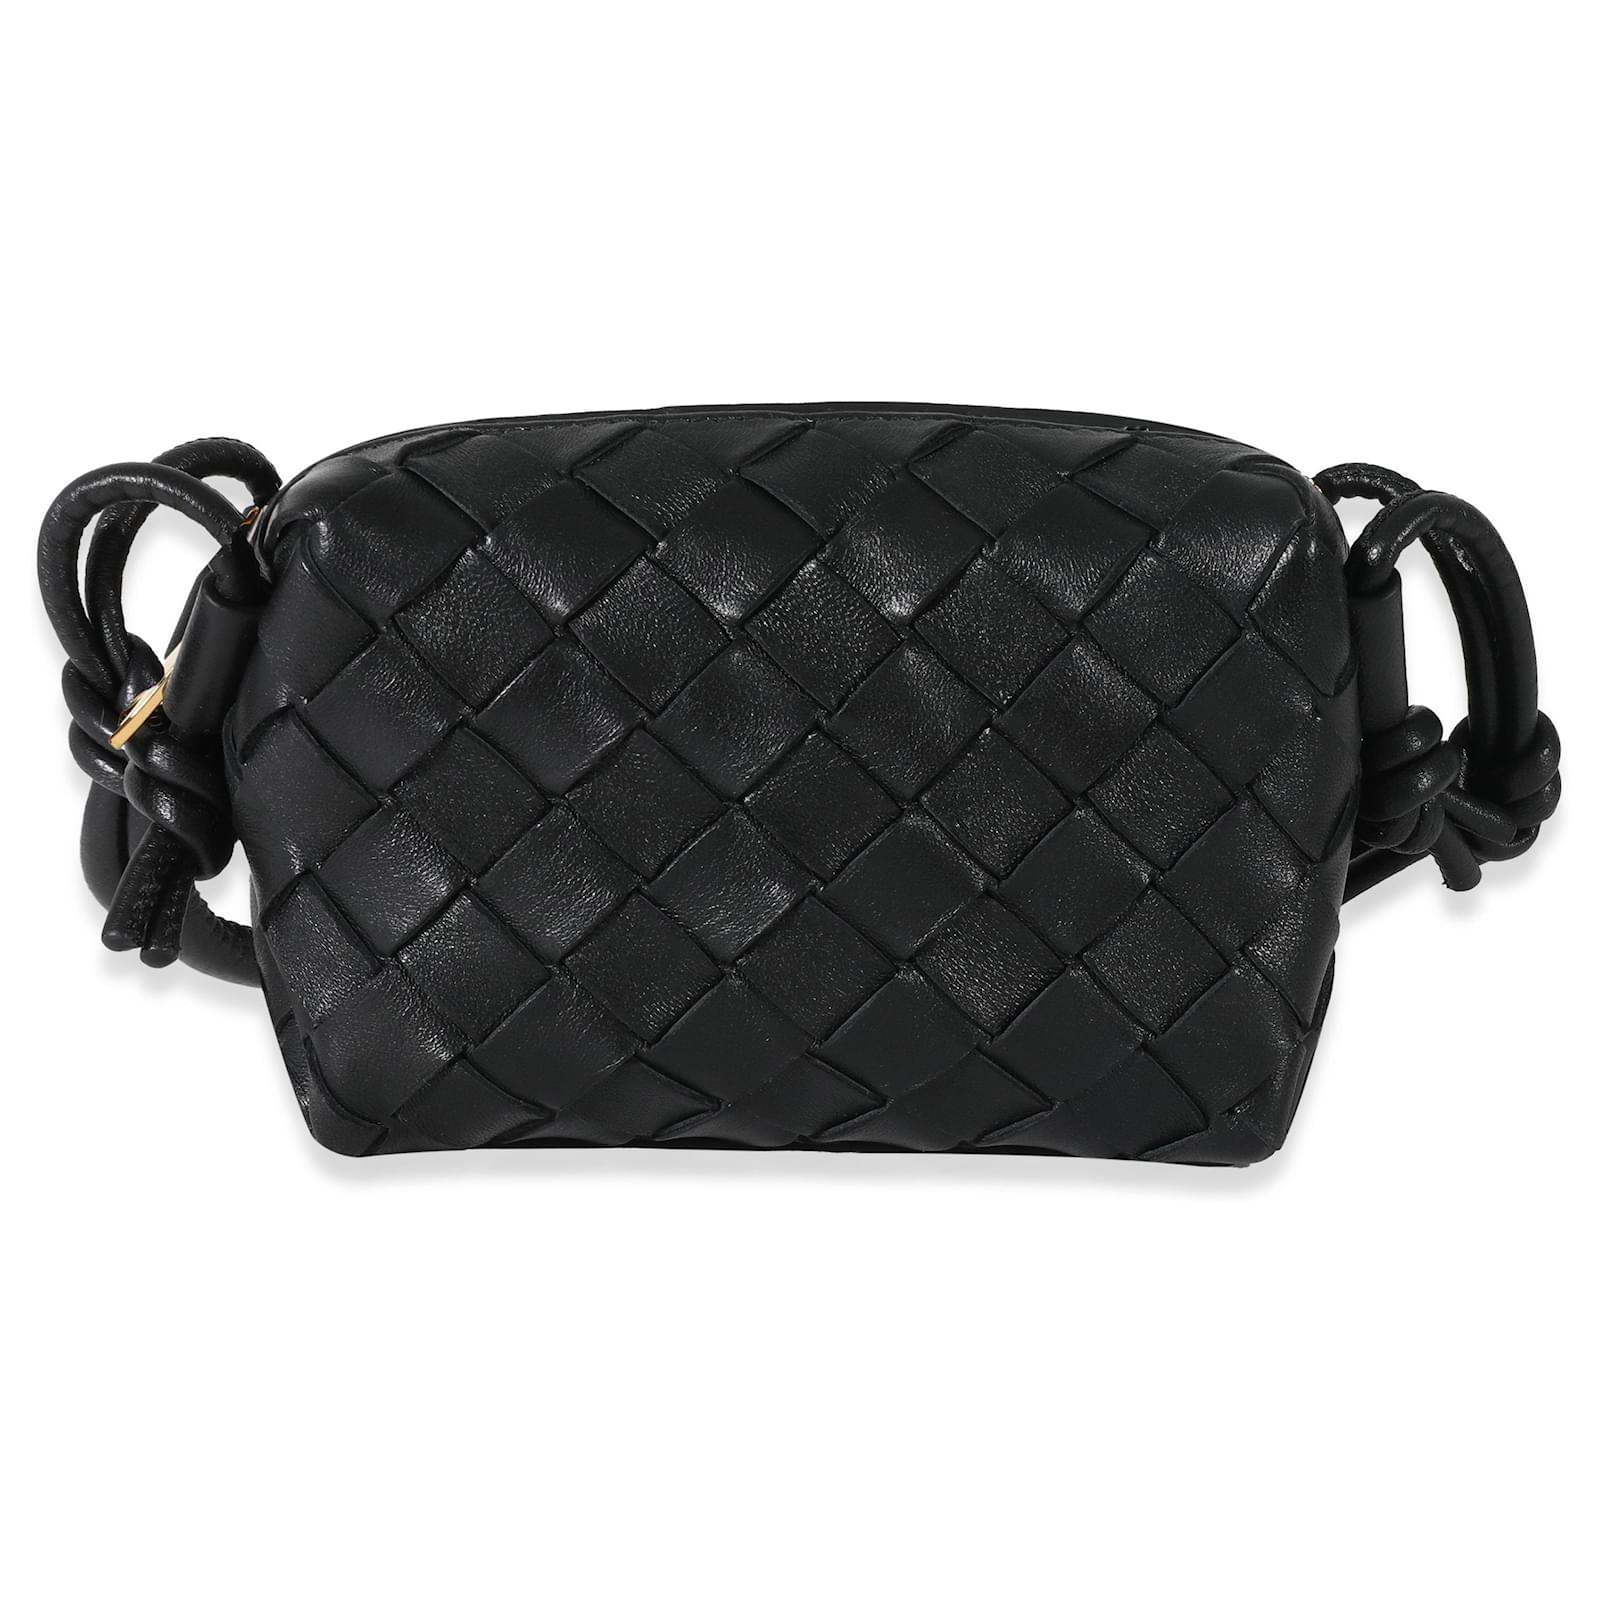 Candy Loop Leather Shoulder Bag in Black - Bottega Veneta